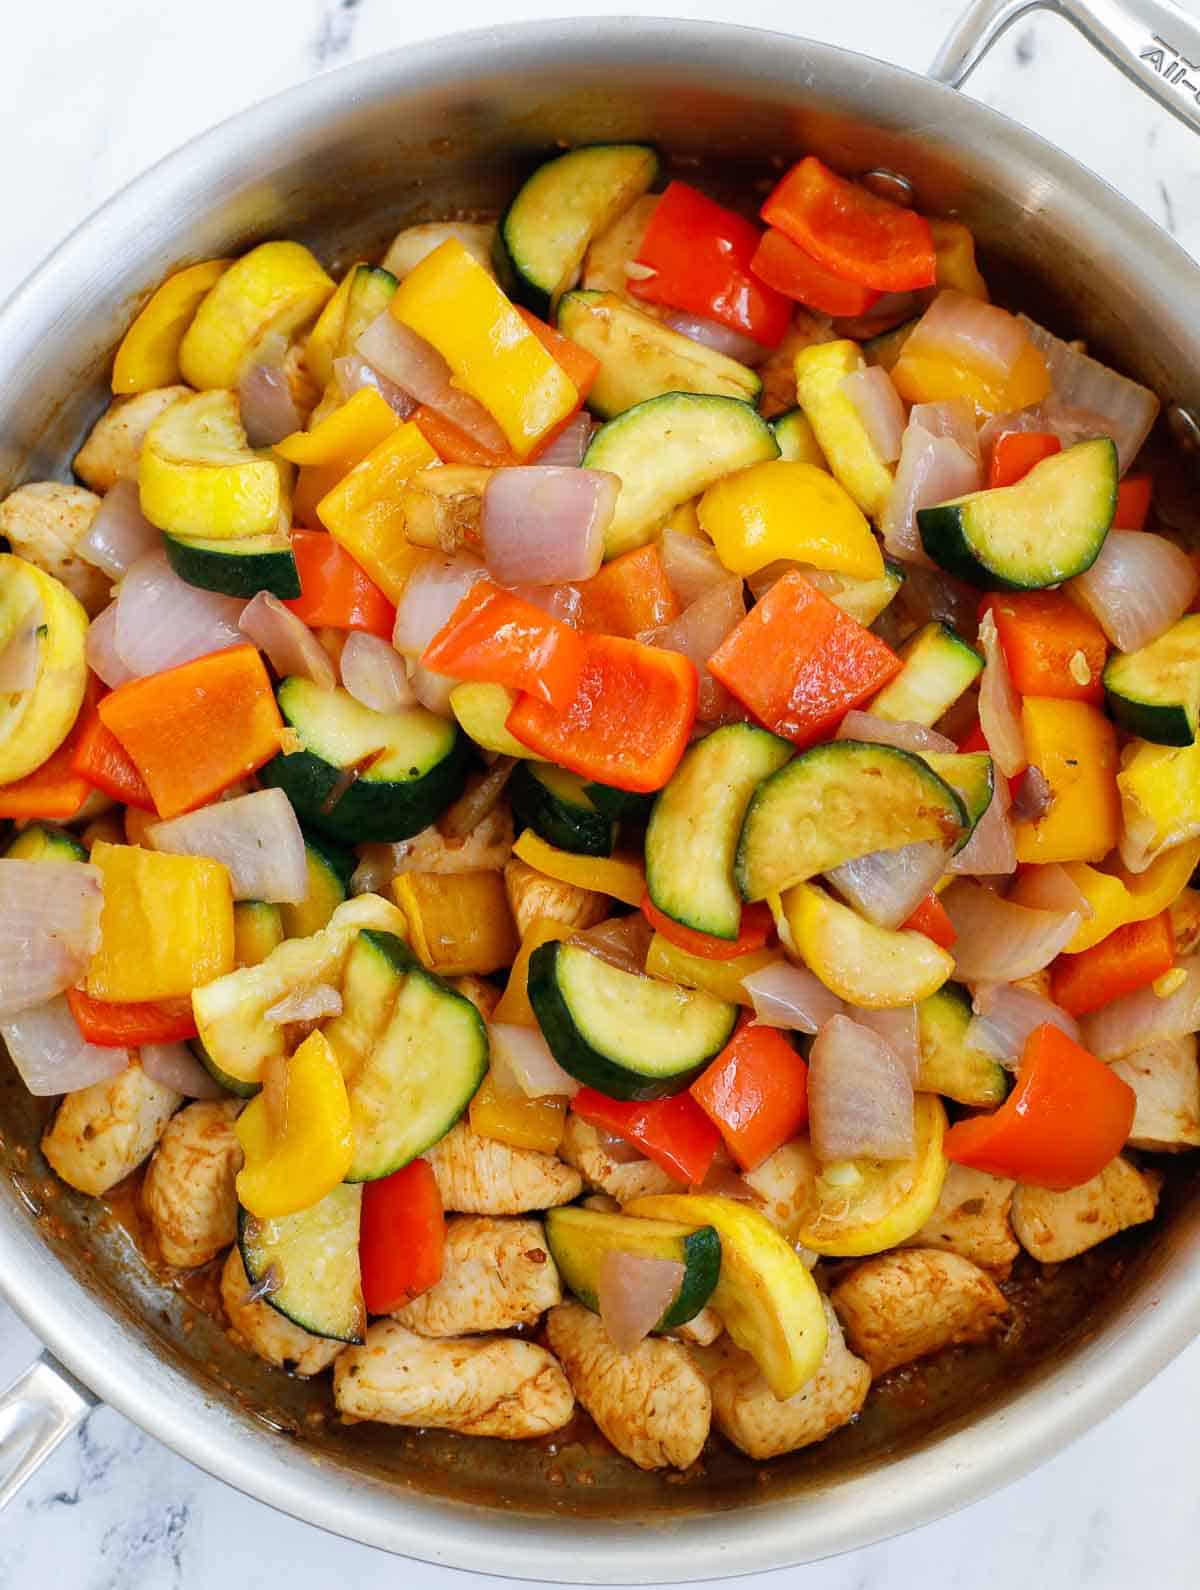 Combine chicken and veggie stir fry in a skillet.